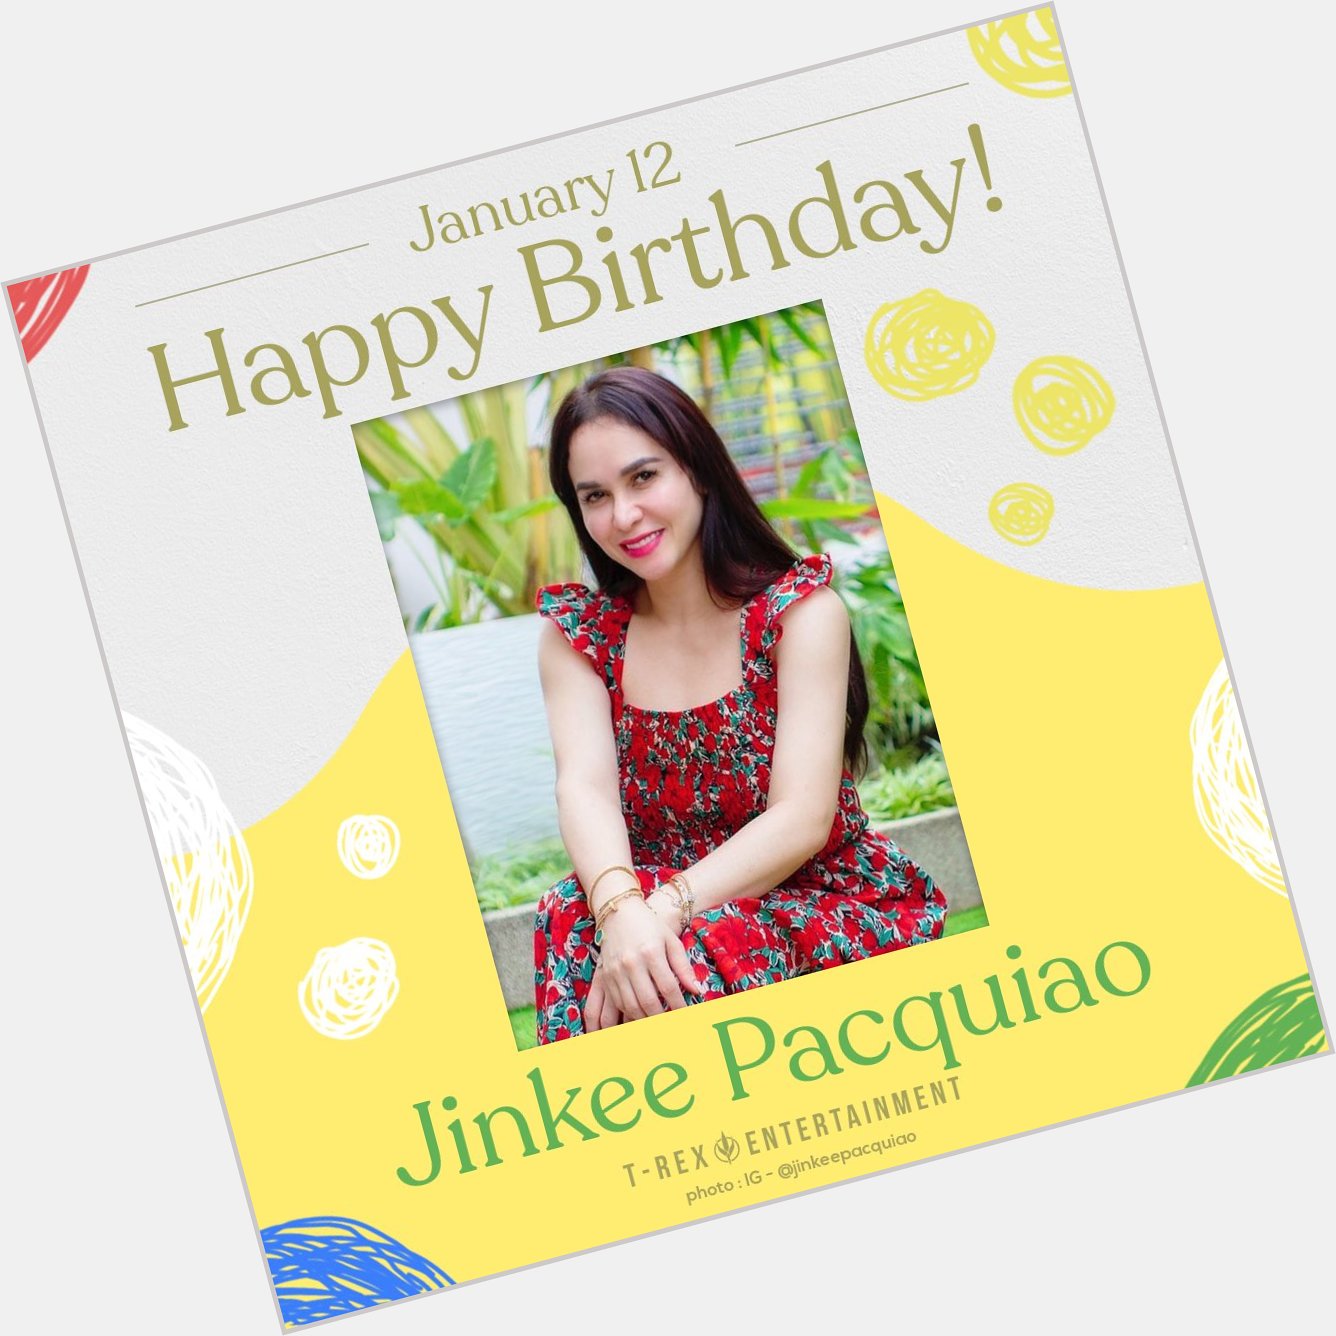 Happy birthday to you, Jinkee Pacquiao! 